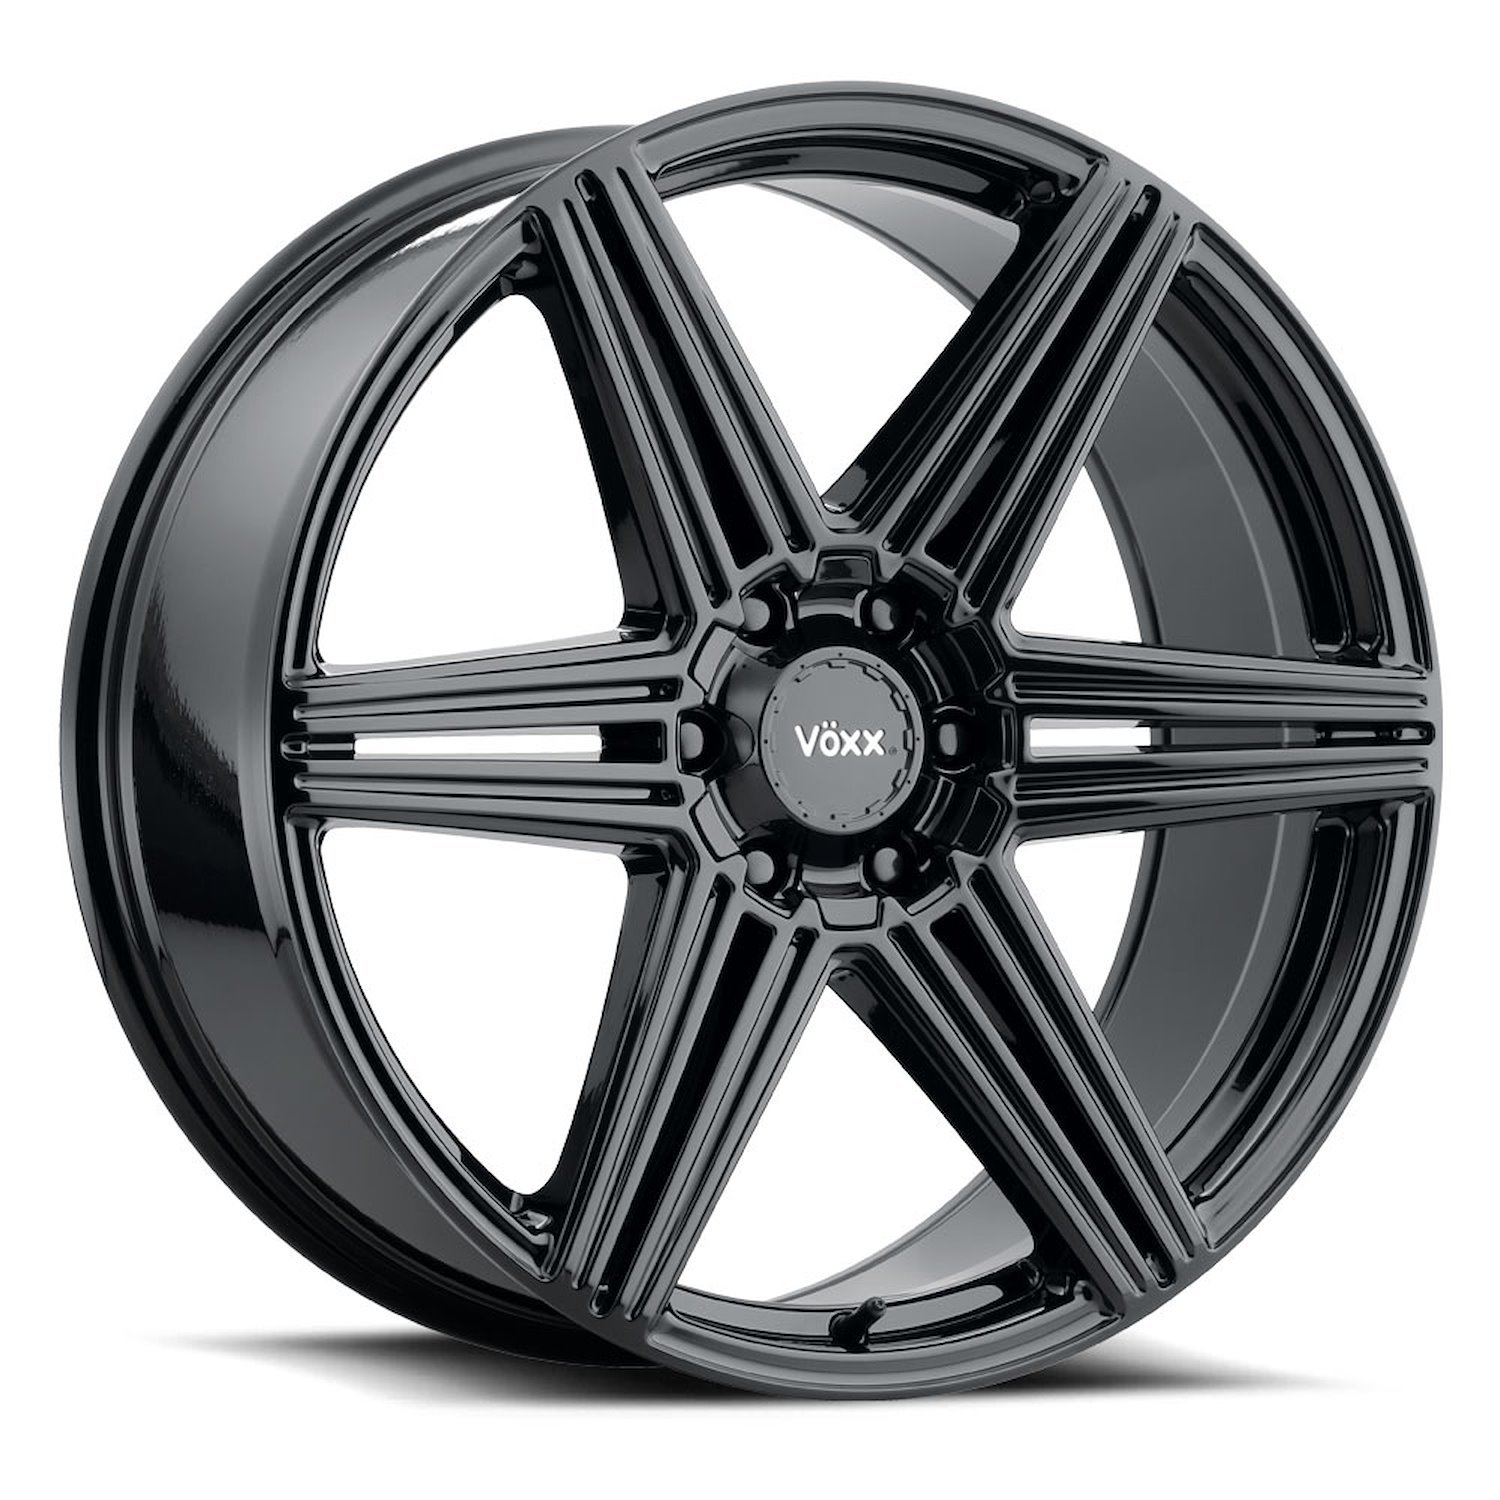 SOT 229-6009-25 GB Sotto Wheel [Size: 22" x 9"] Finish: Gloss Black